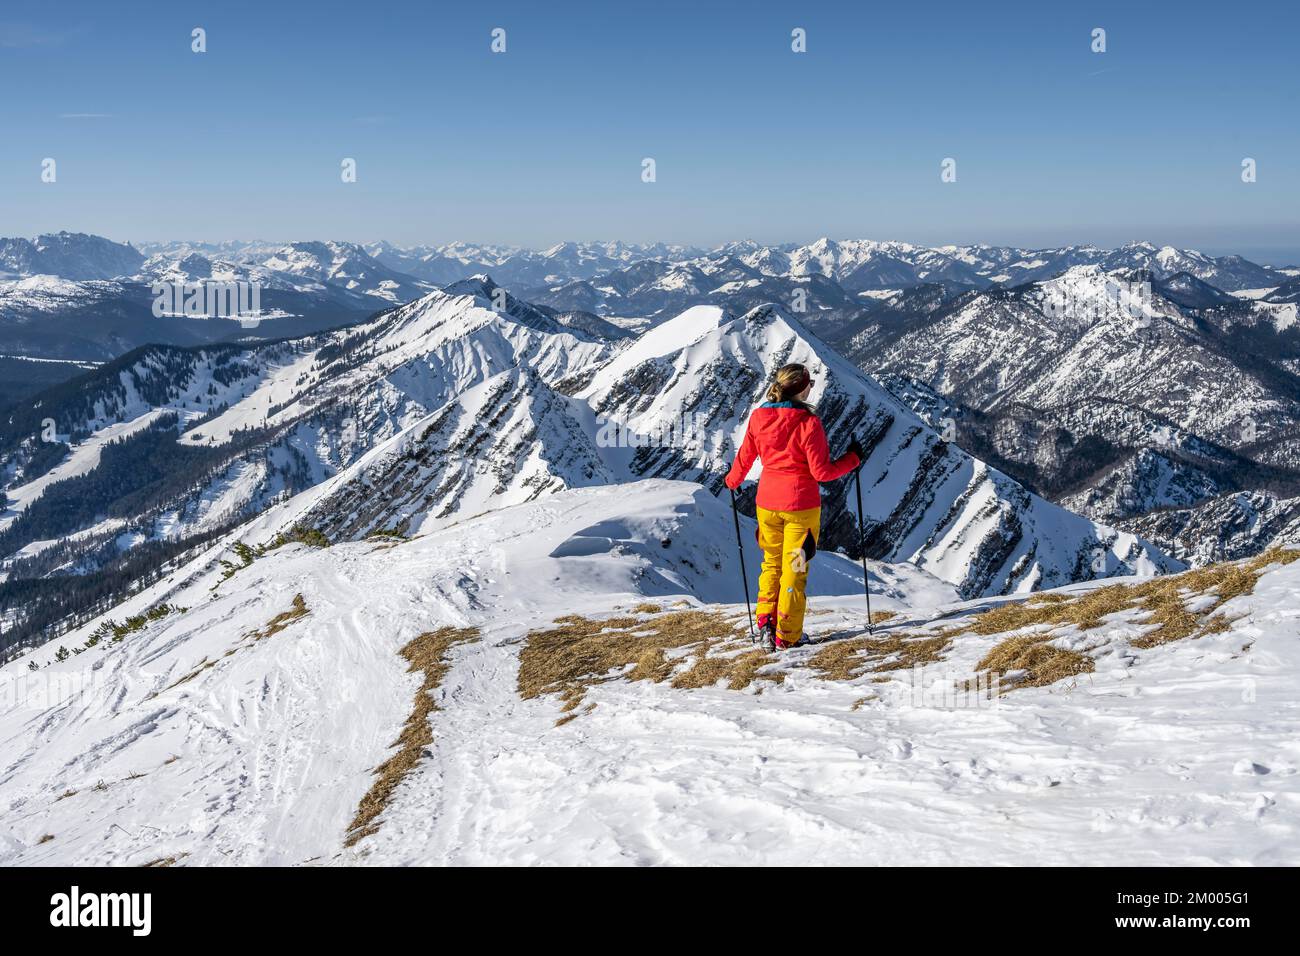 Ski tourers at the summit, mountains in winter, Sonntagshorn, Chiemgau Alps, Bavaria, Germany, Europe Stock Photo